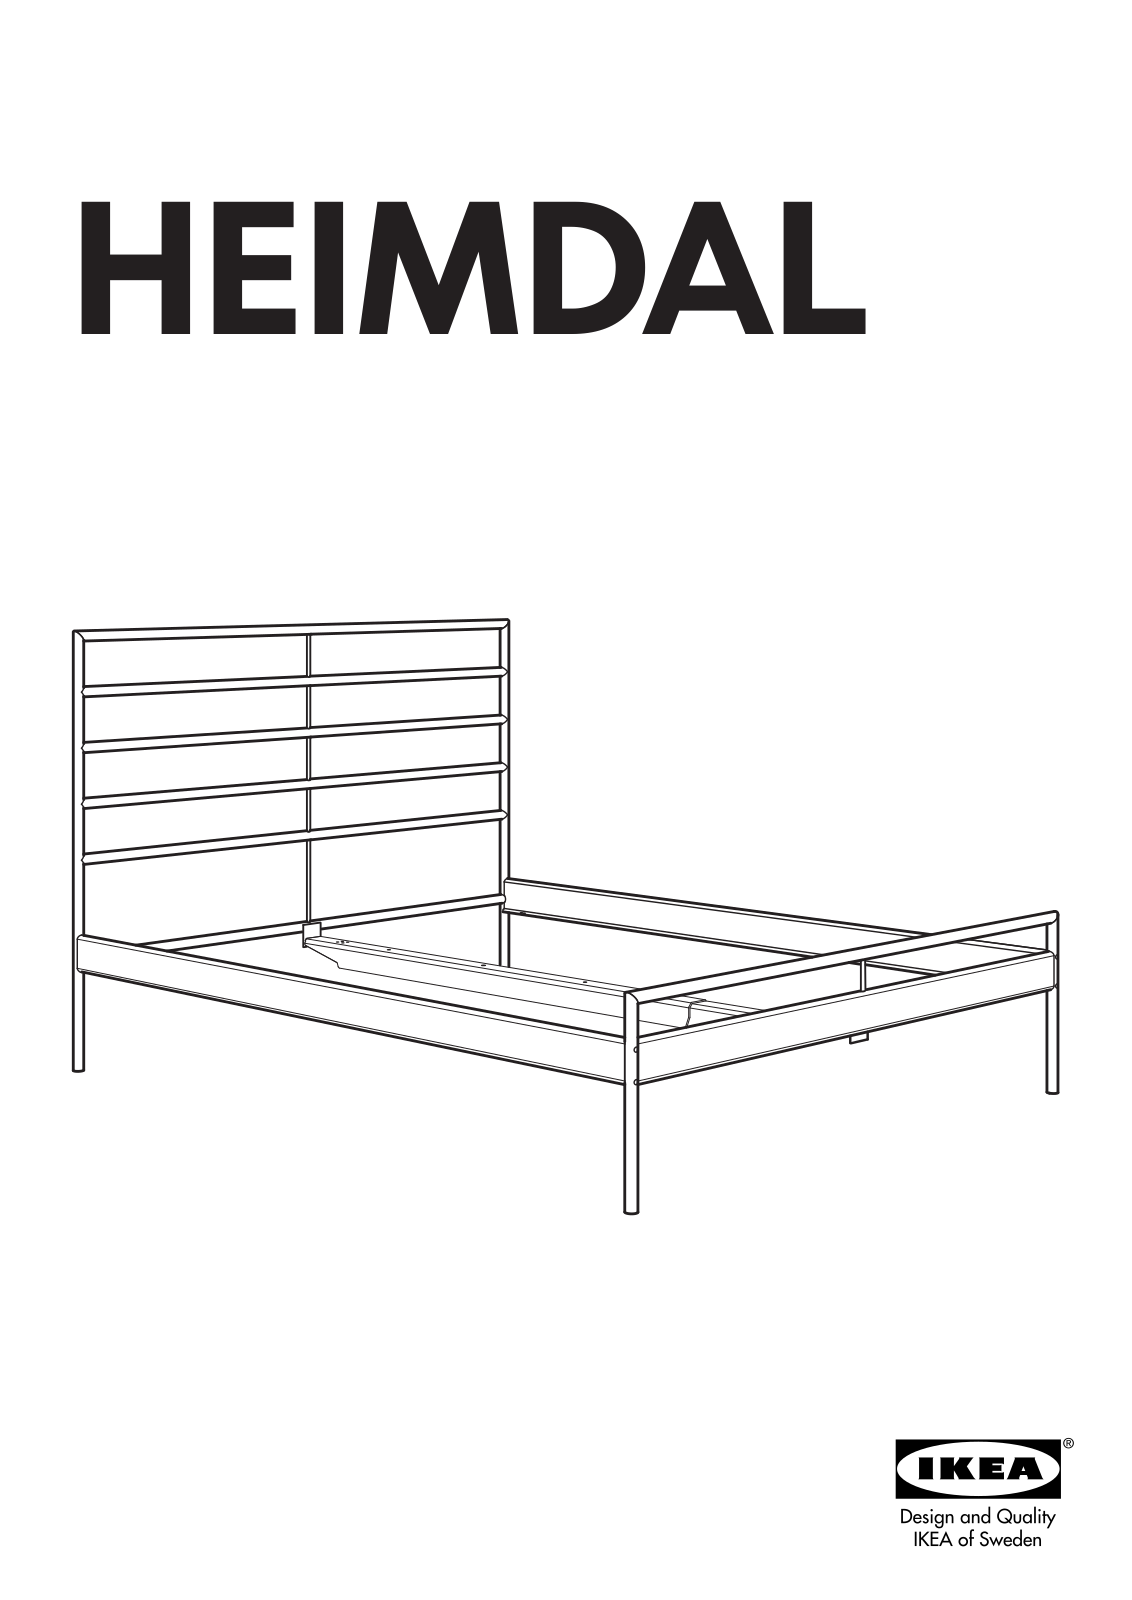 IKEA HEIMDAL HEAD-FOOTBOARD QUEEN, HEIMDAL HEAD-FOOTBOARD FULL-DOUBLE Assembly Instruction